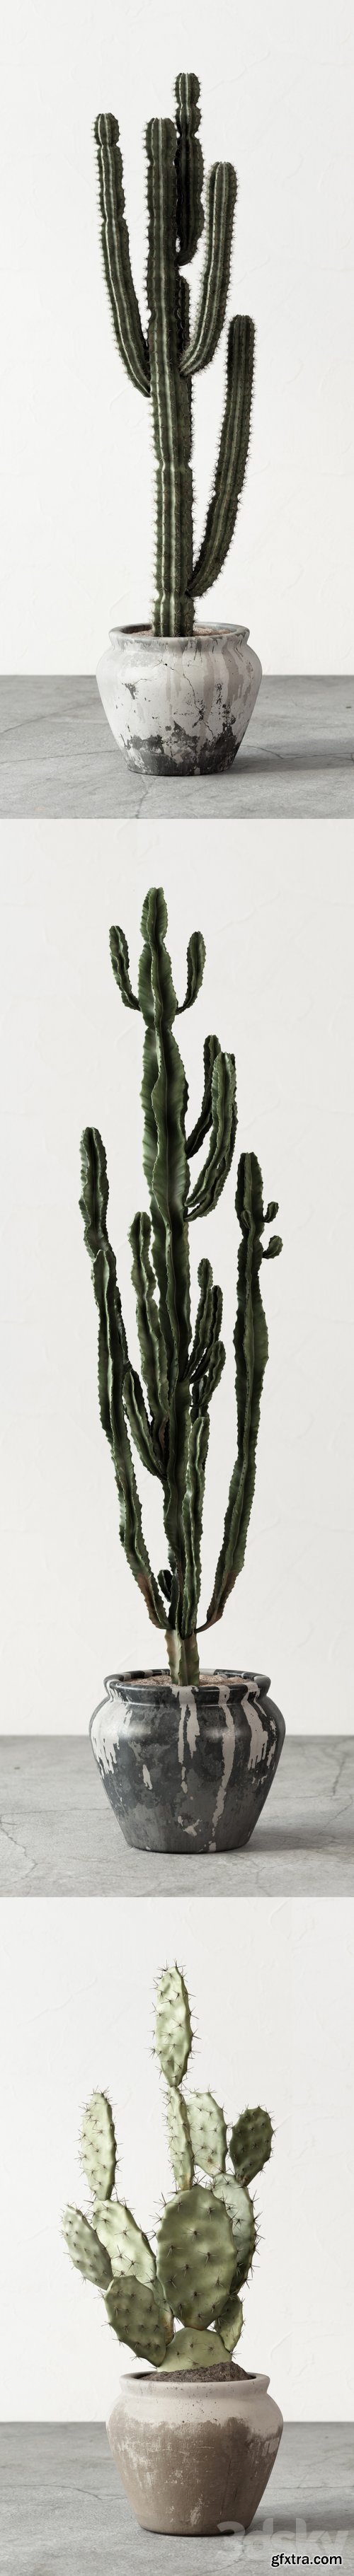 Set of Cactuses